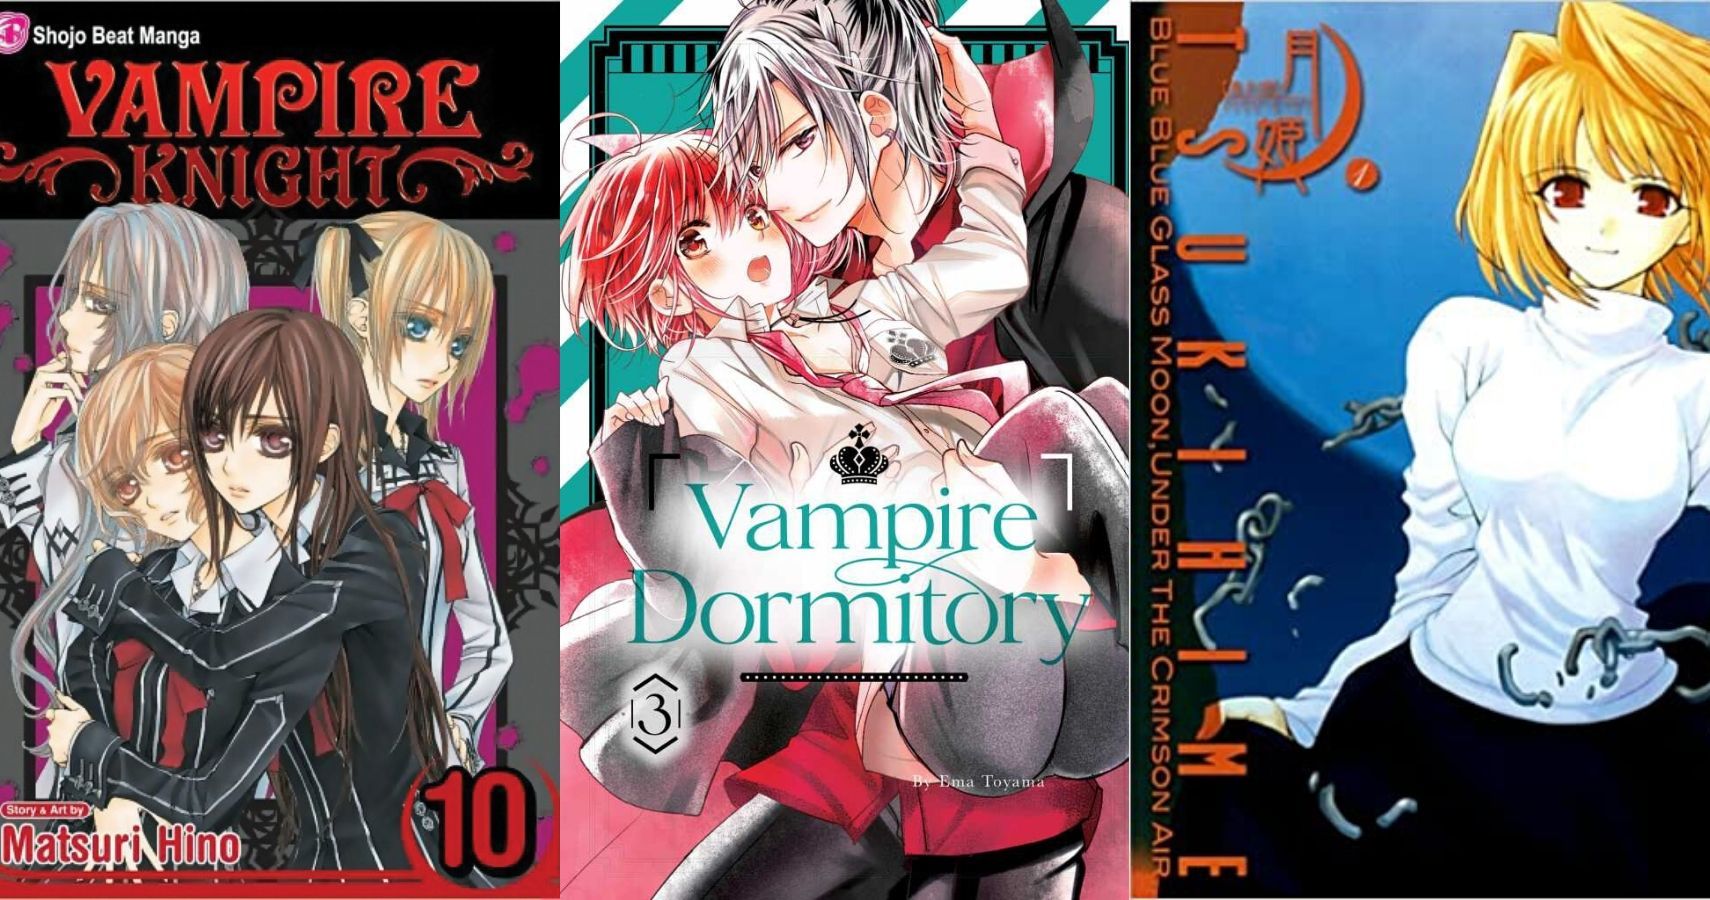 anime vampire boy and human girl in love